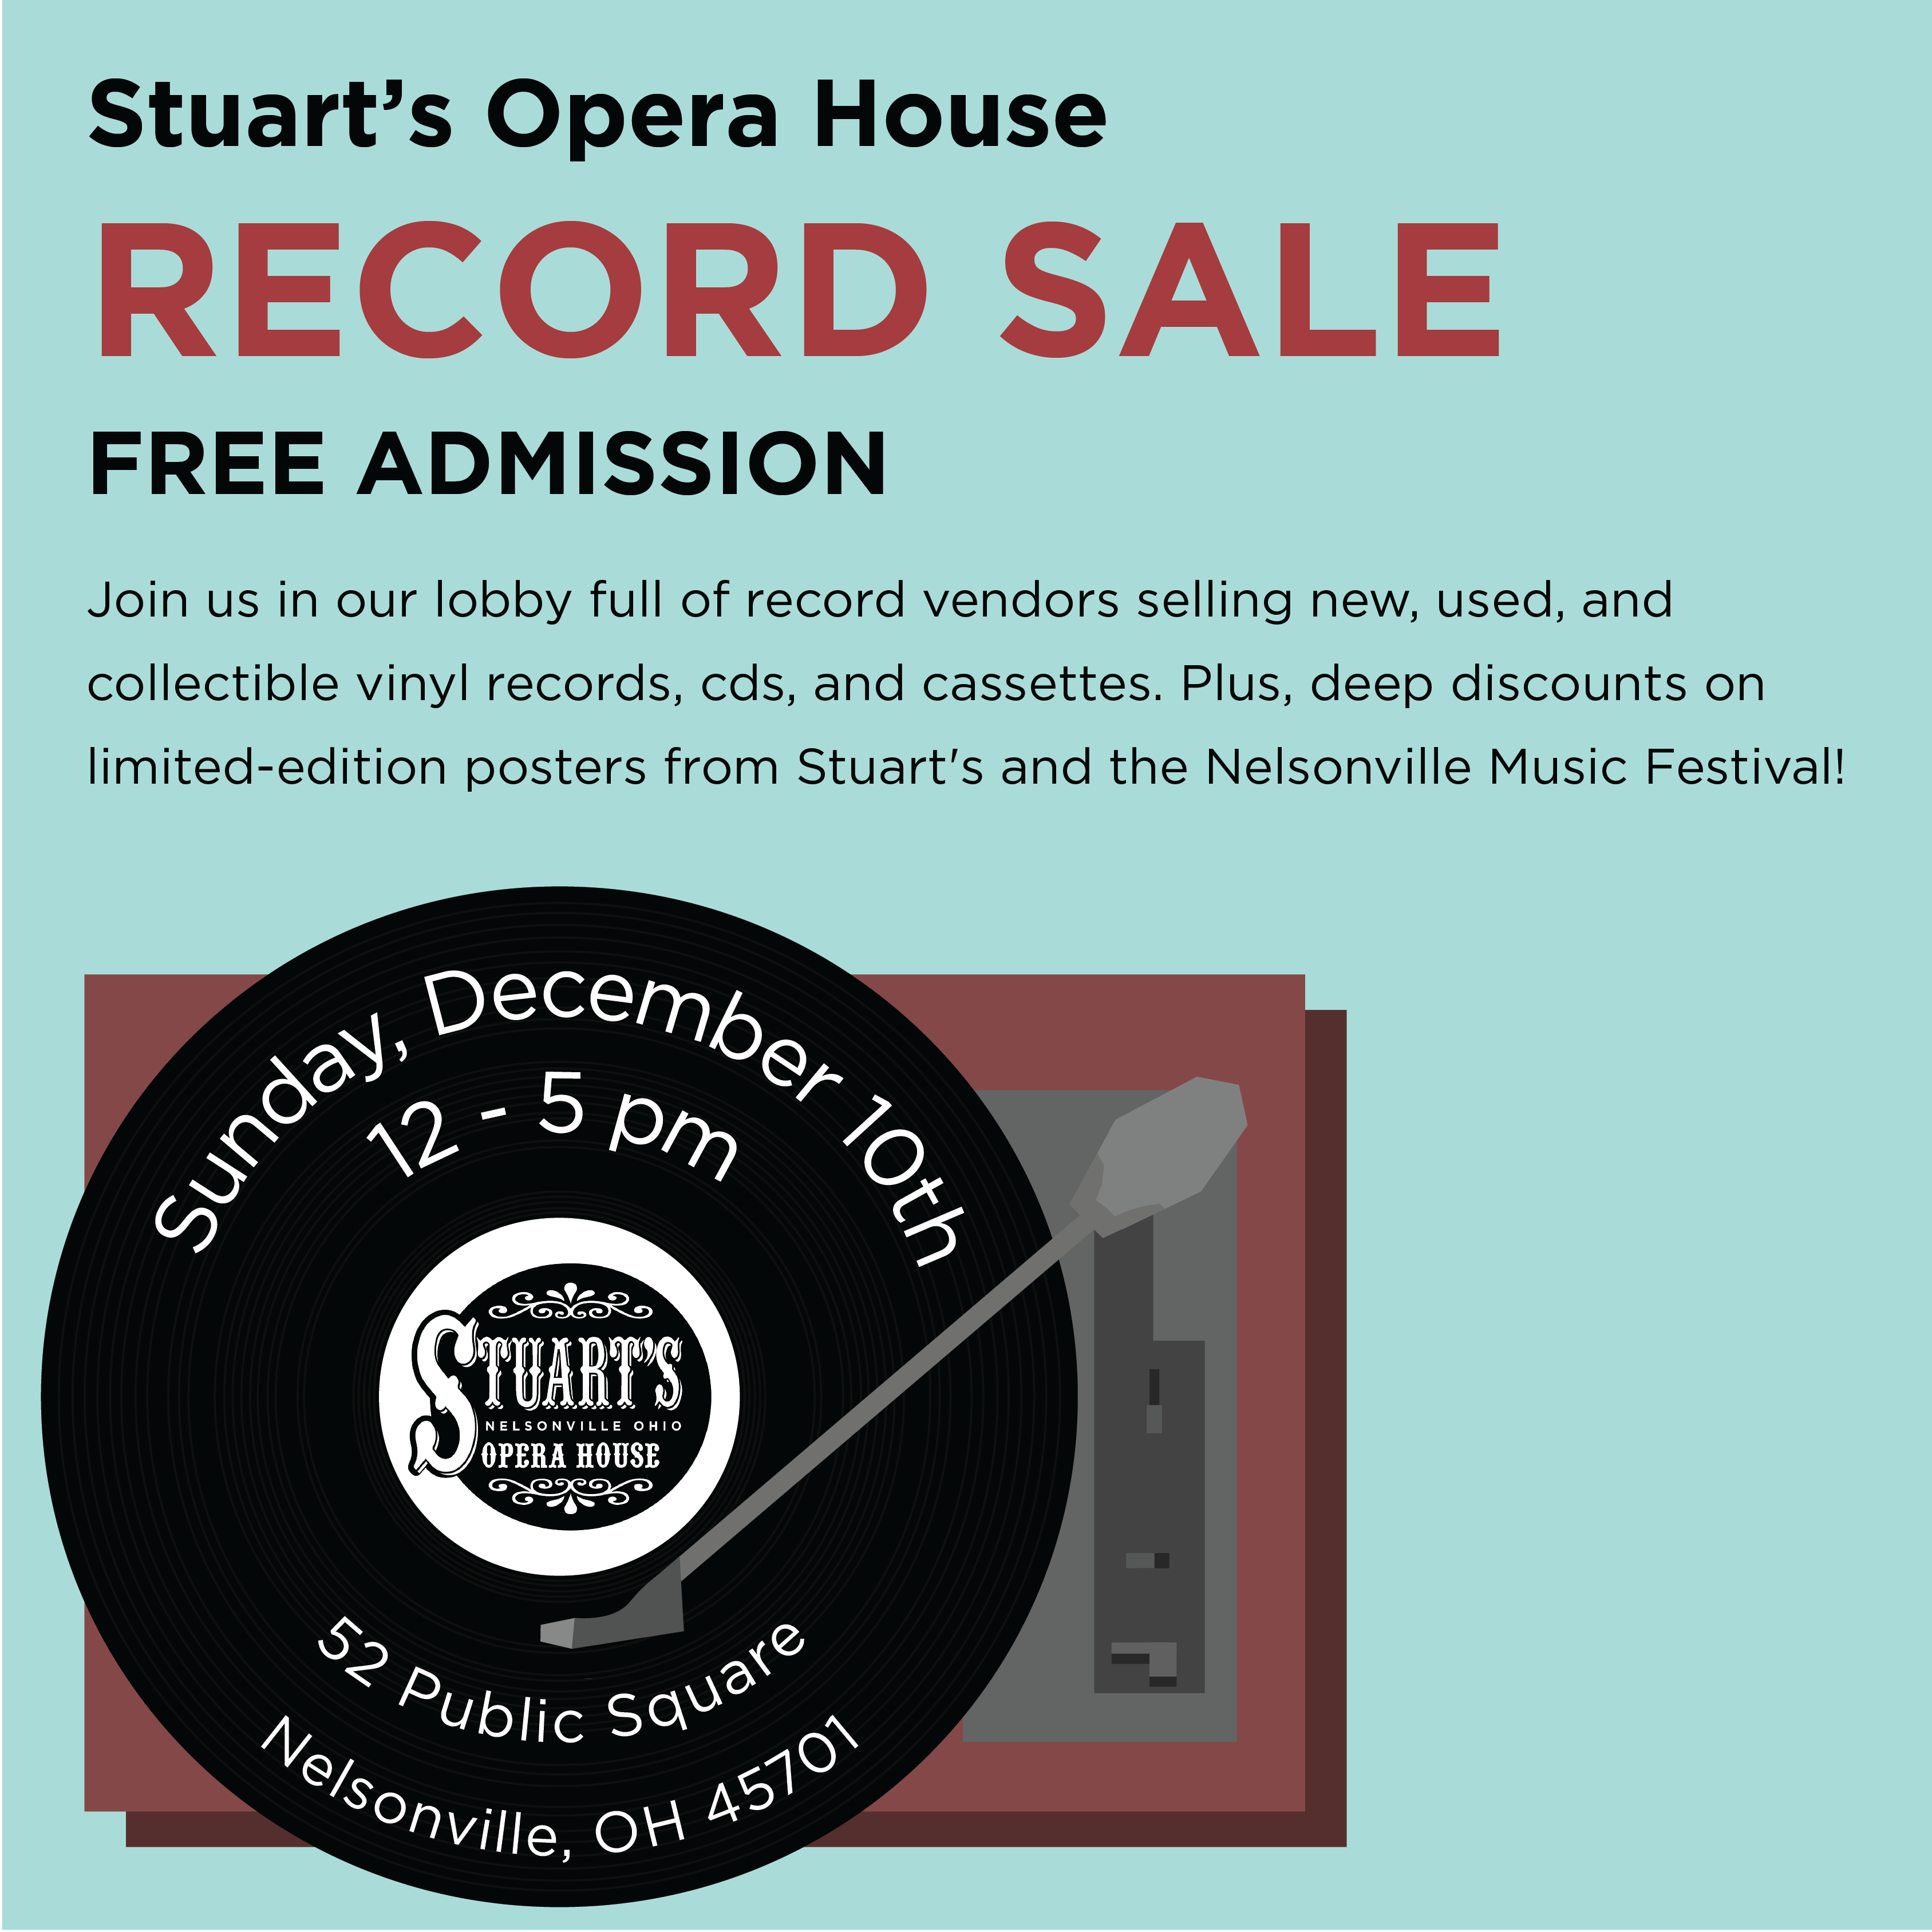 A flyer for Stuart's Record Sale.